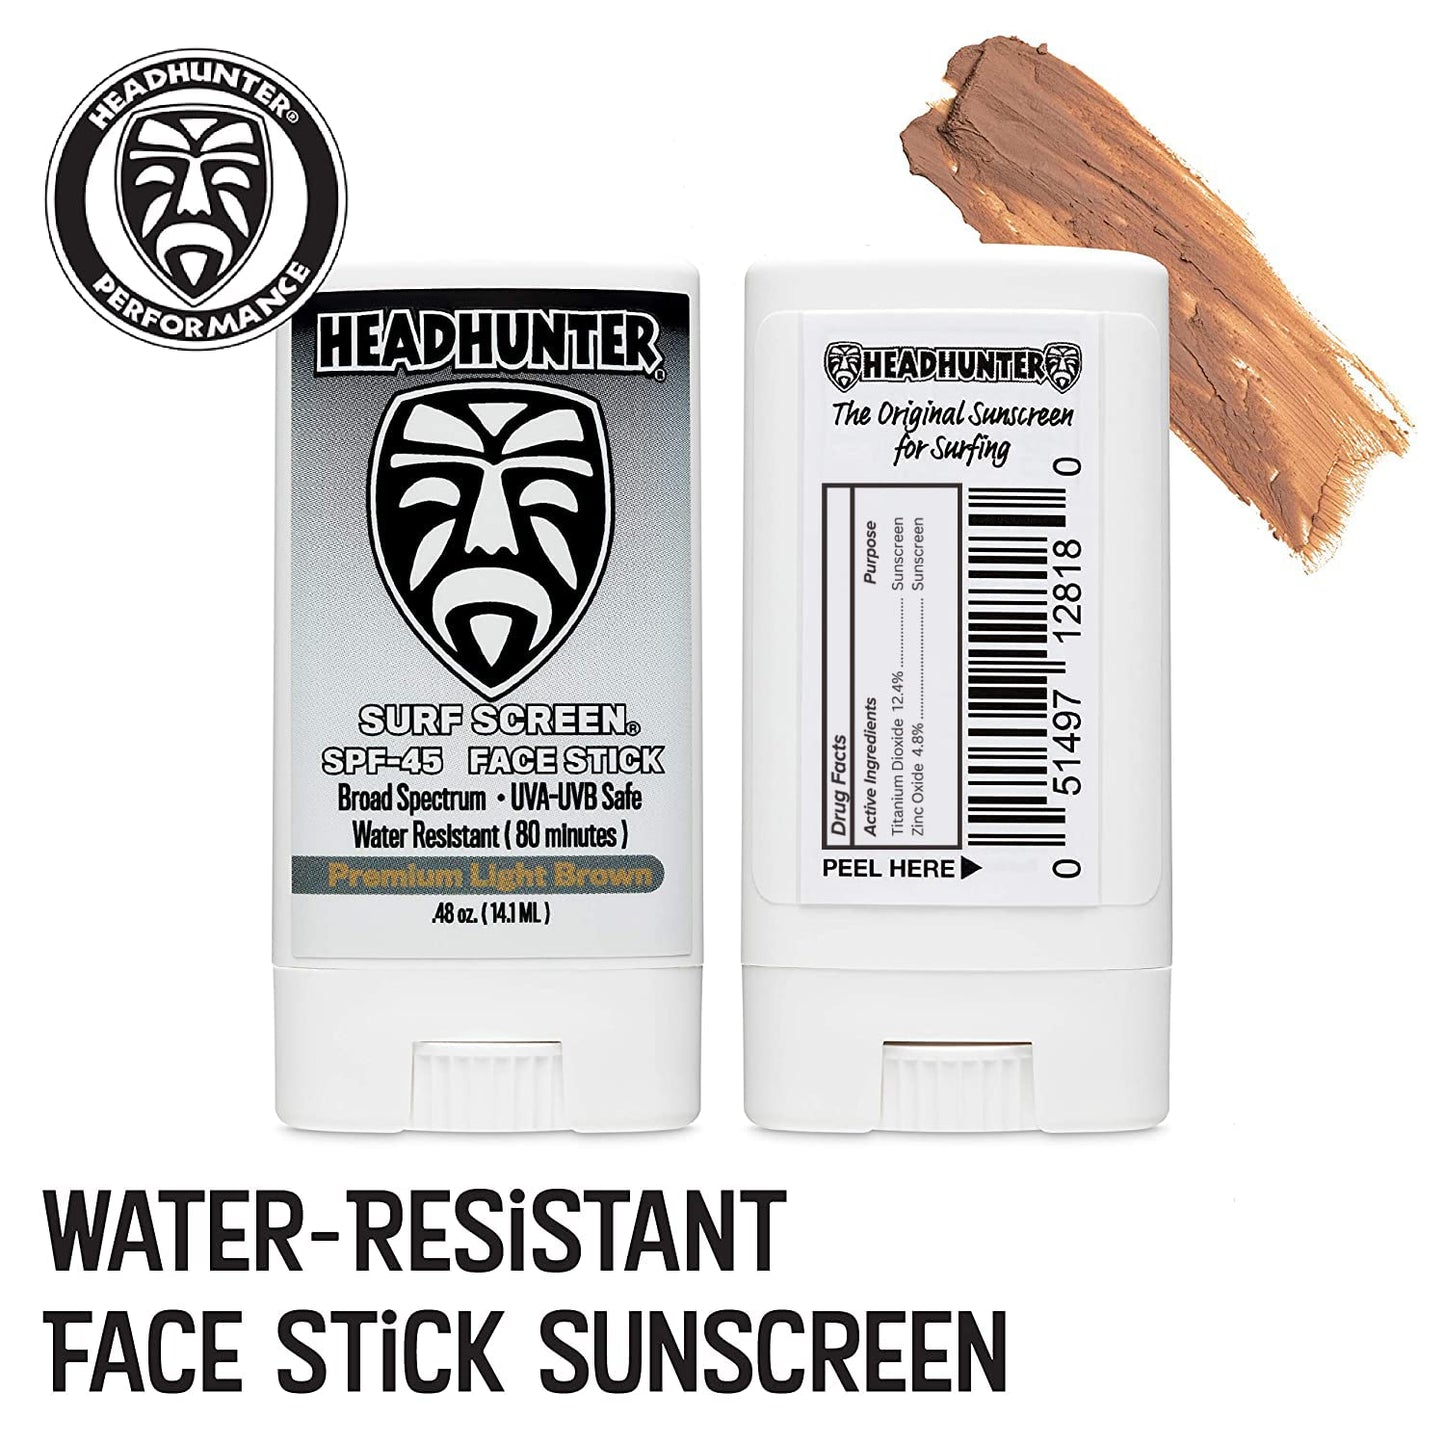 SPF 45 Mineral Sunscreen Face Stick - 6 Pack "Light Brown"